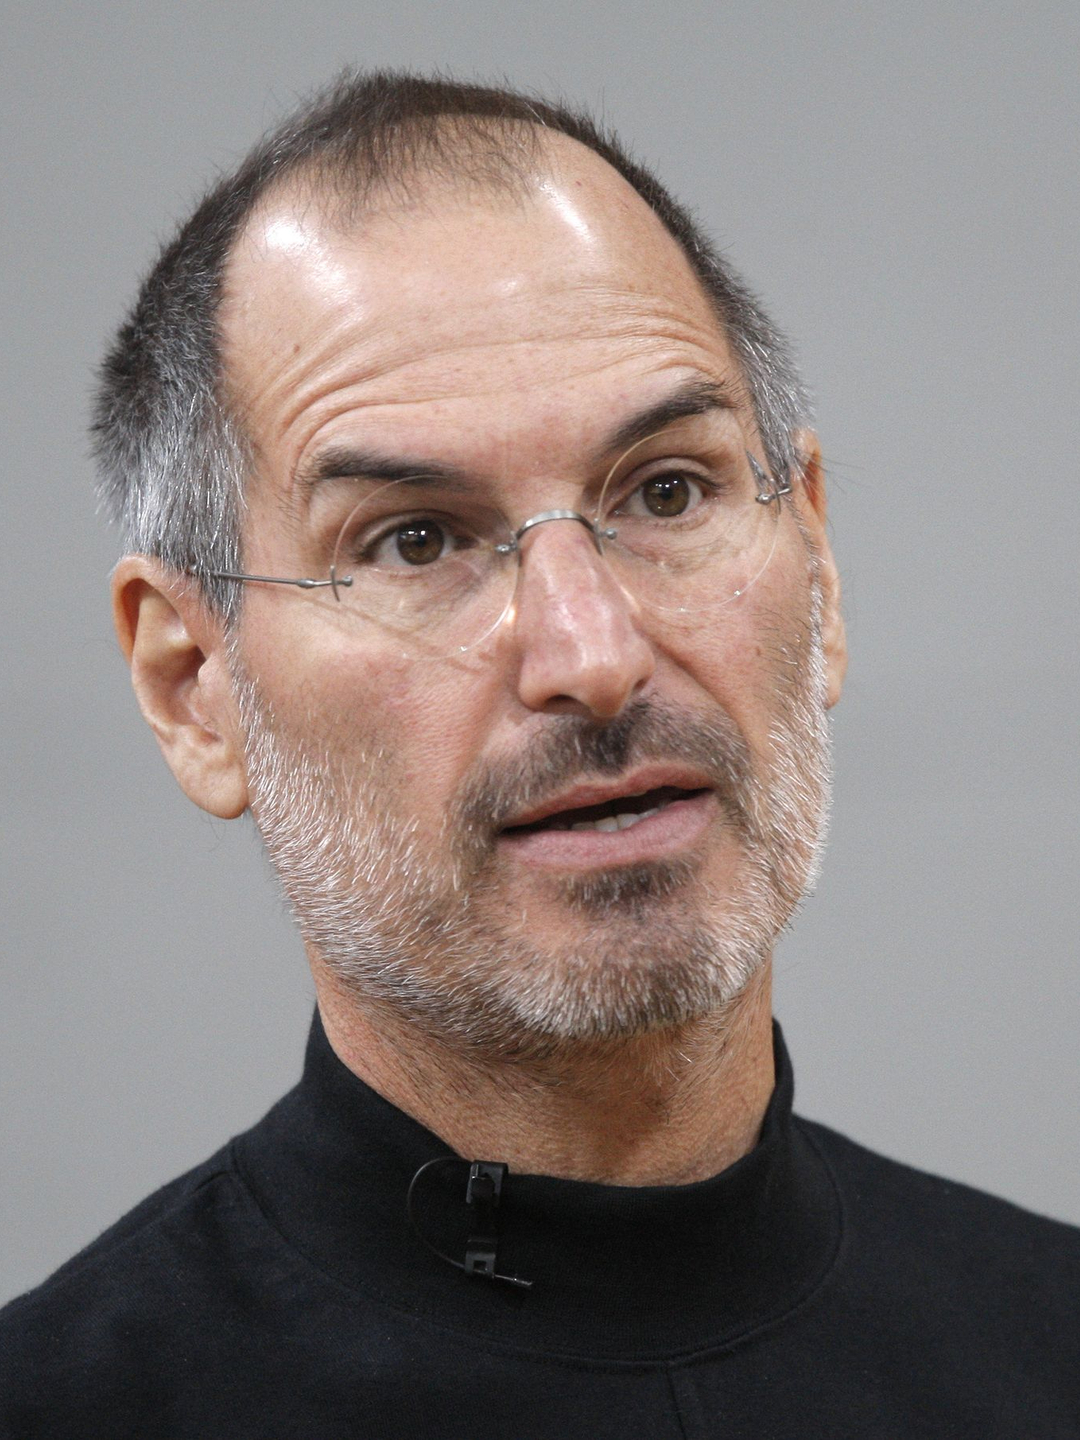 Steve Jobs last years